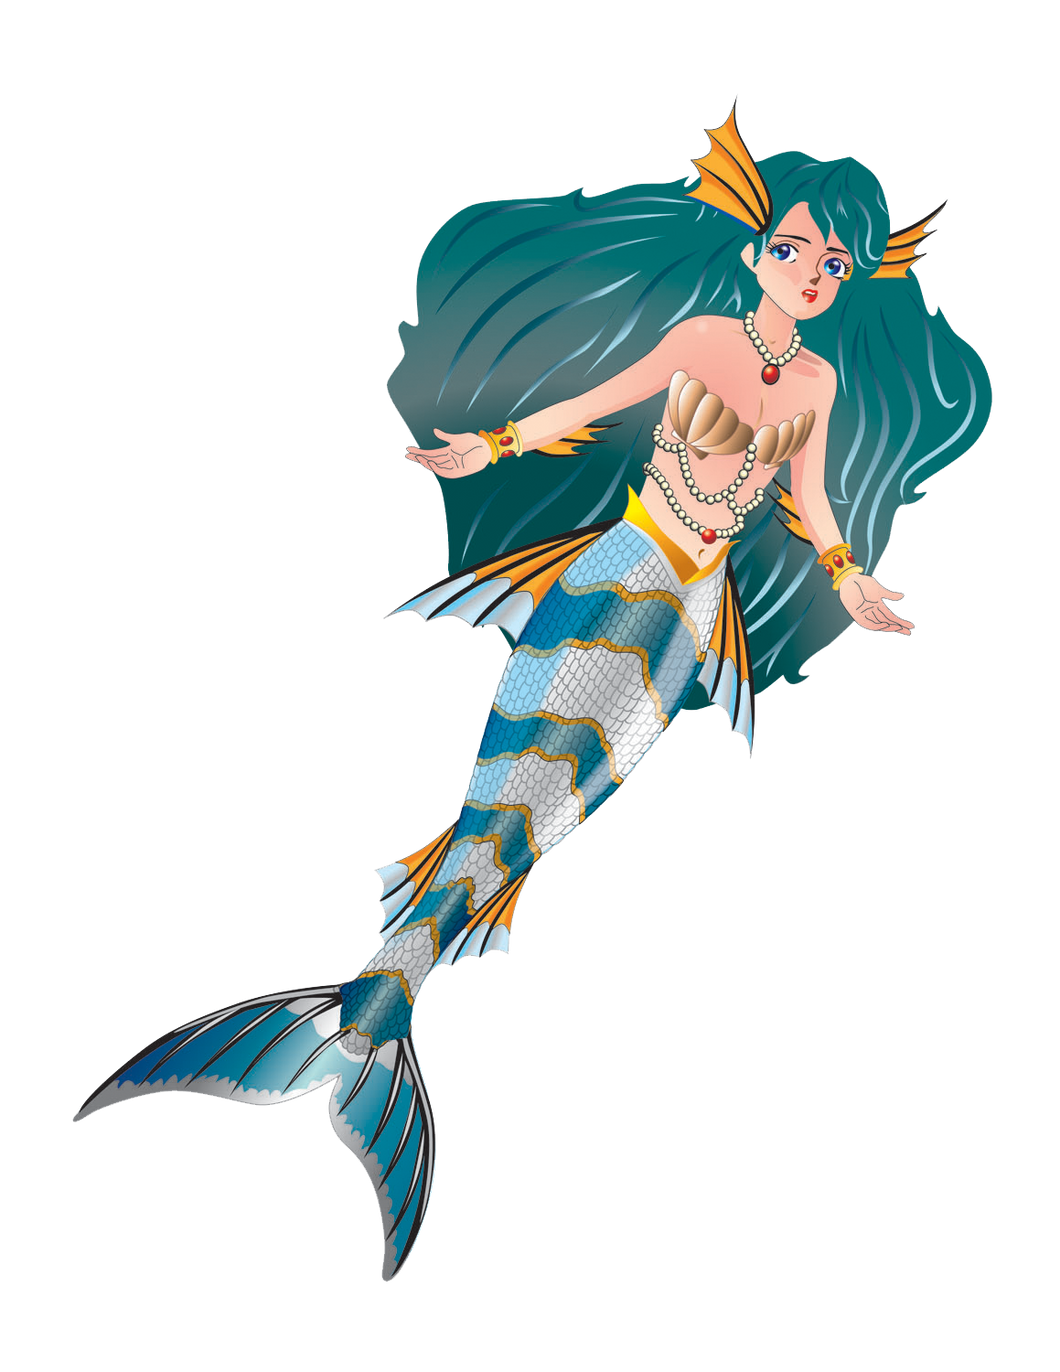 5ft Tall WindZone Mermaid